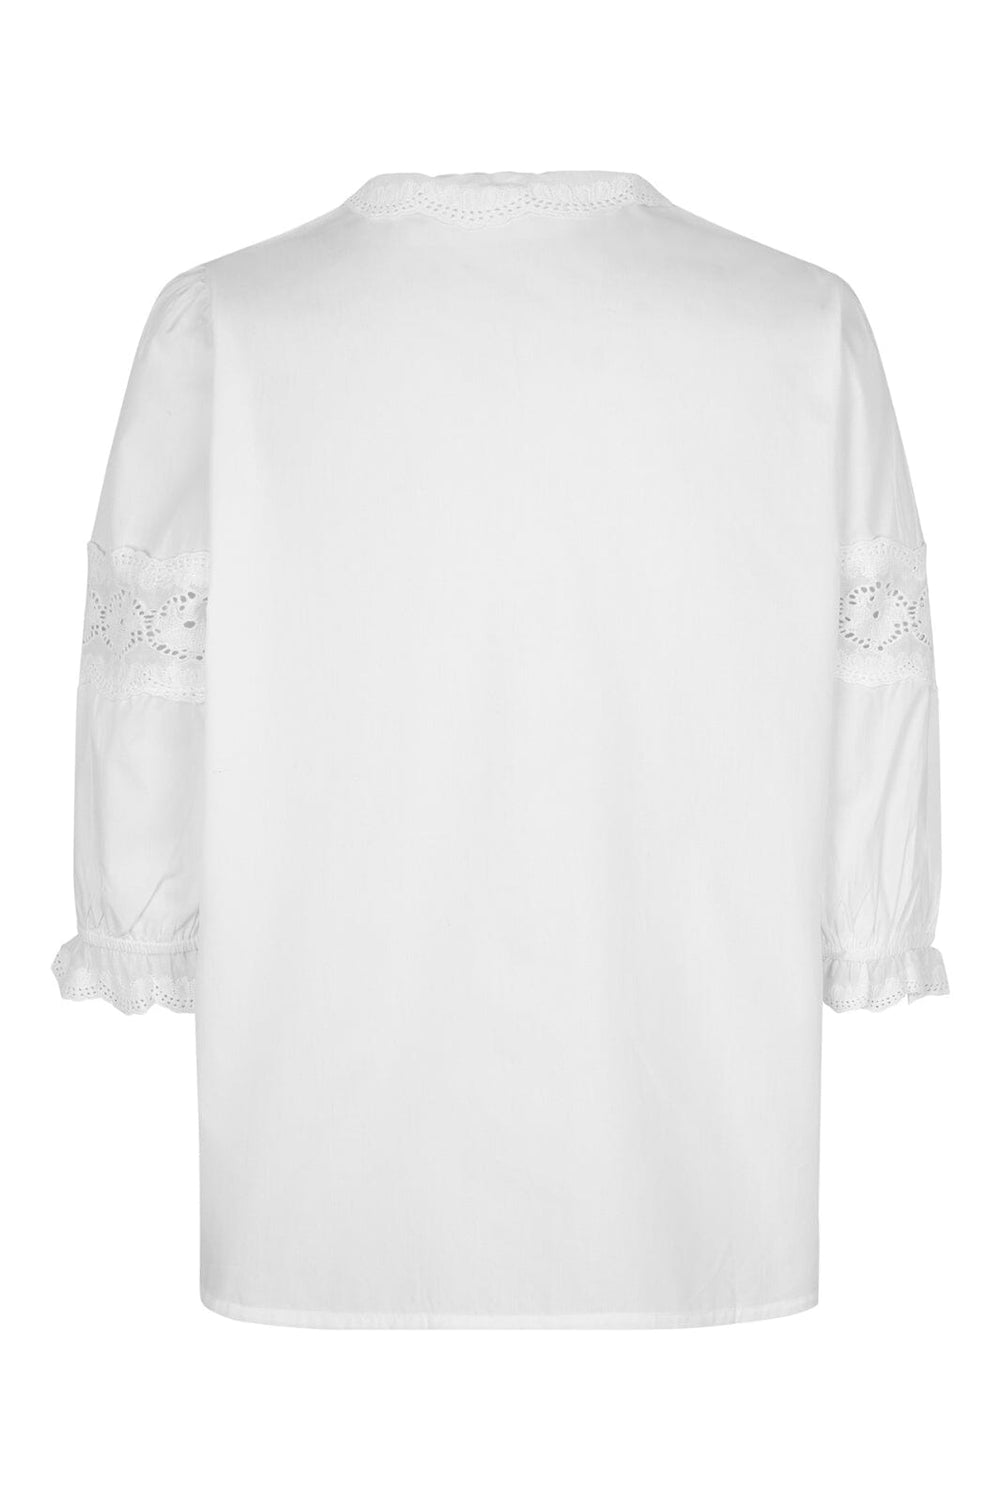 Lollys Laundry - PaviaLL Shirt LS - 01 White Bluser 